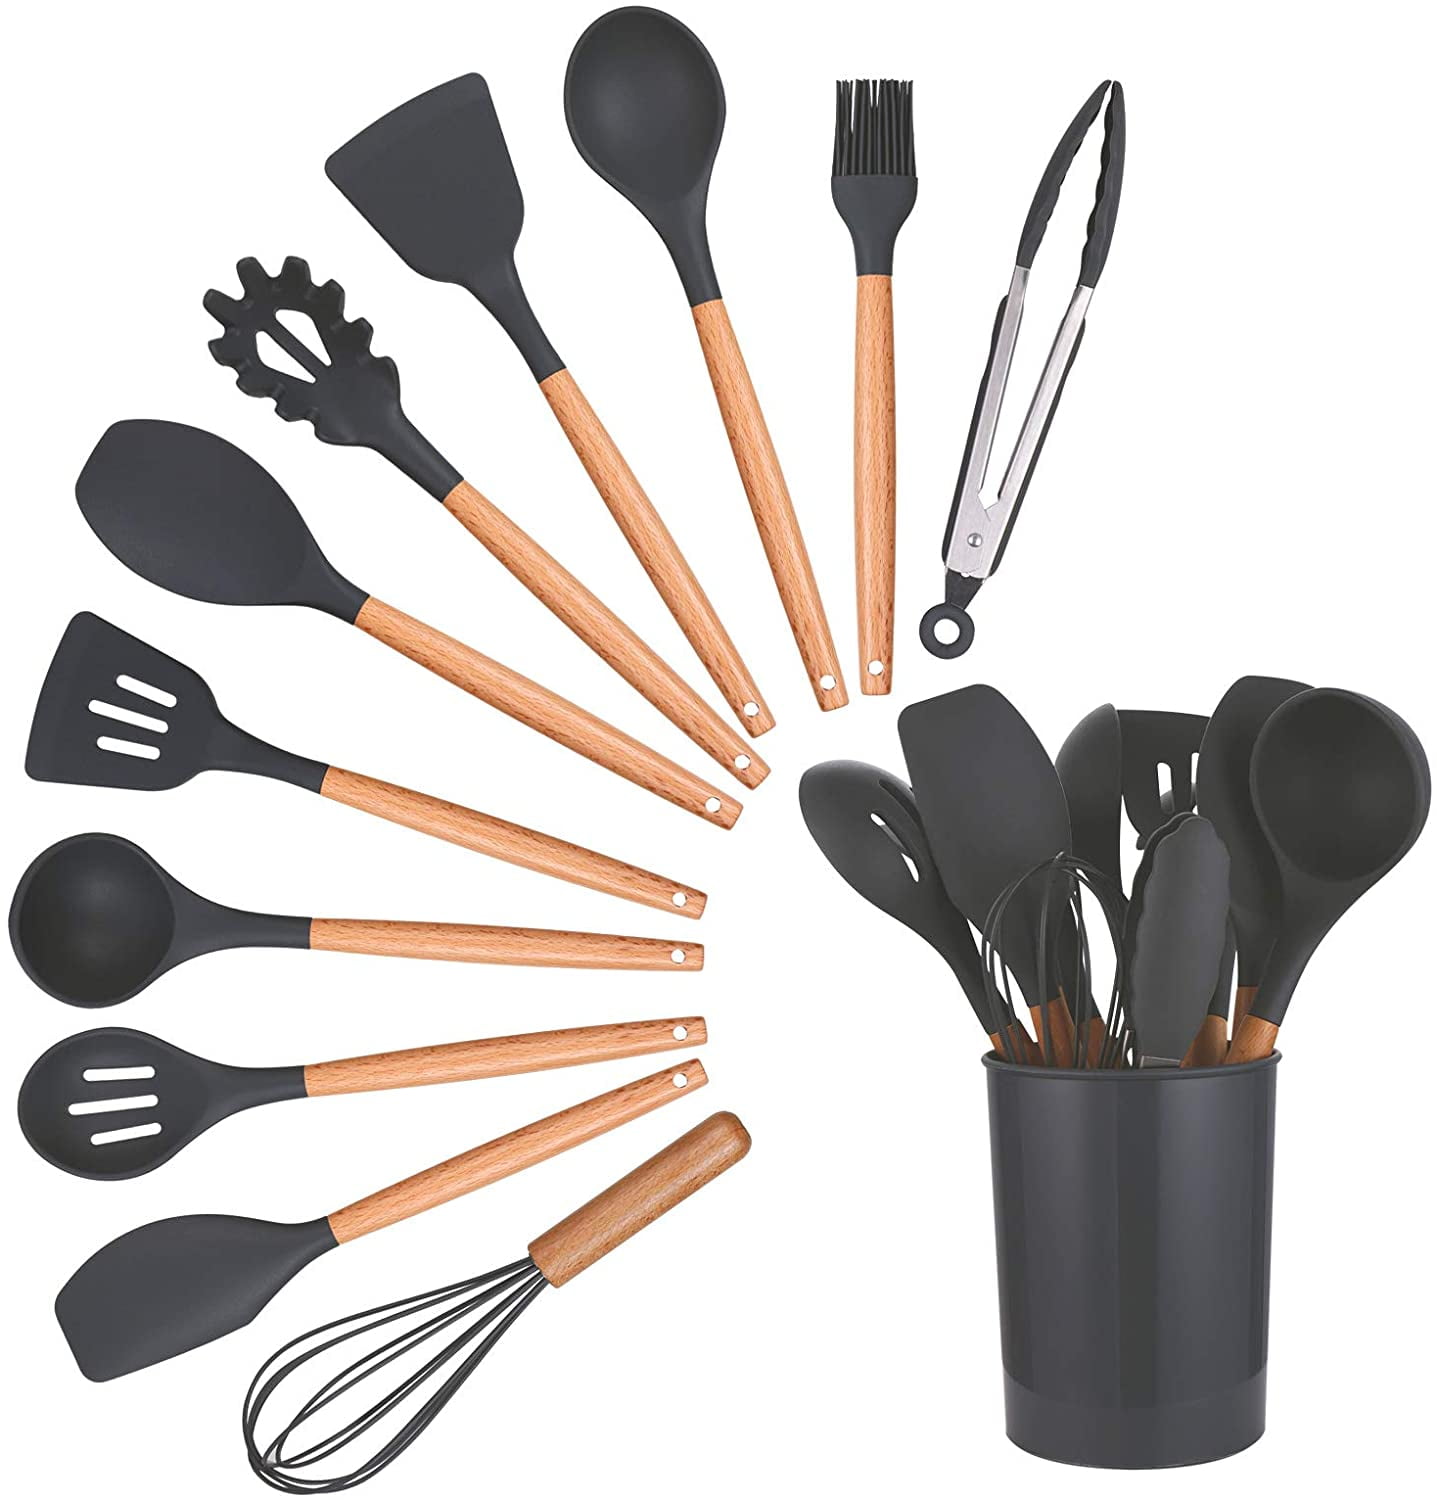 12 Pcs Silicone Kitchen Cooking Utensils Set Tools Non-stick Spatula Spoon